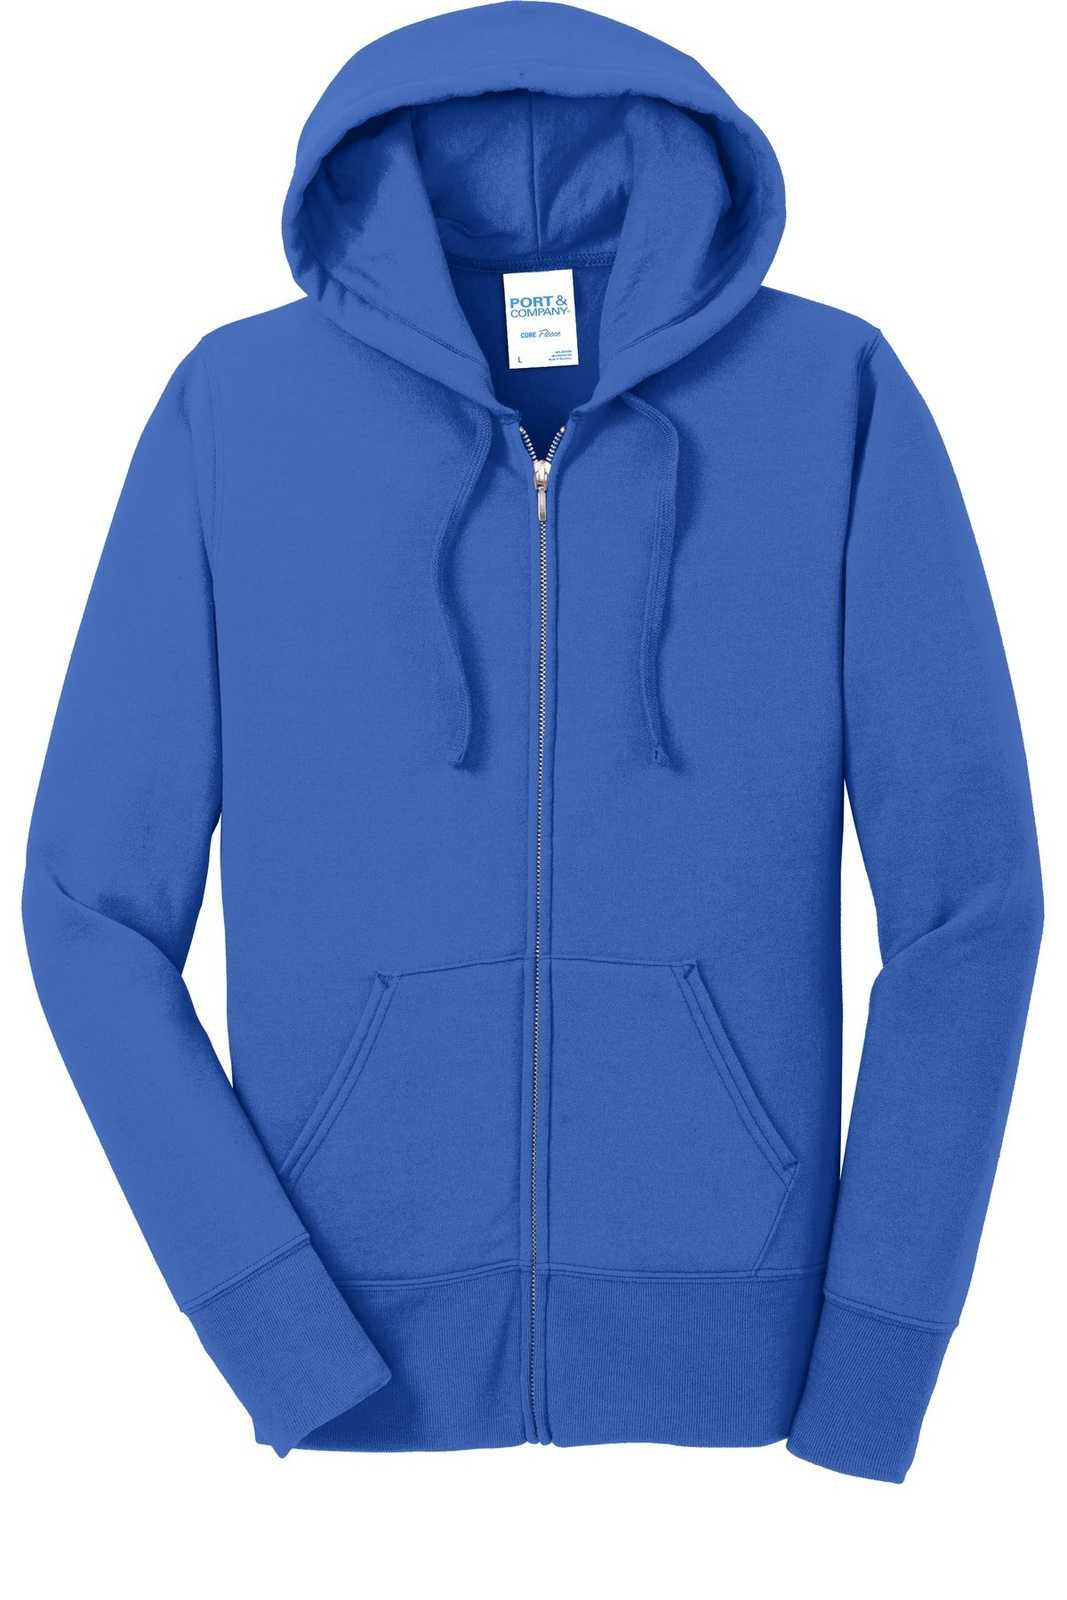 Port &amp; Company LPC78ZH Ladies Core Fleece Full-Zip Hooded Sweatshirt - Royal - HIT a Double - 5